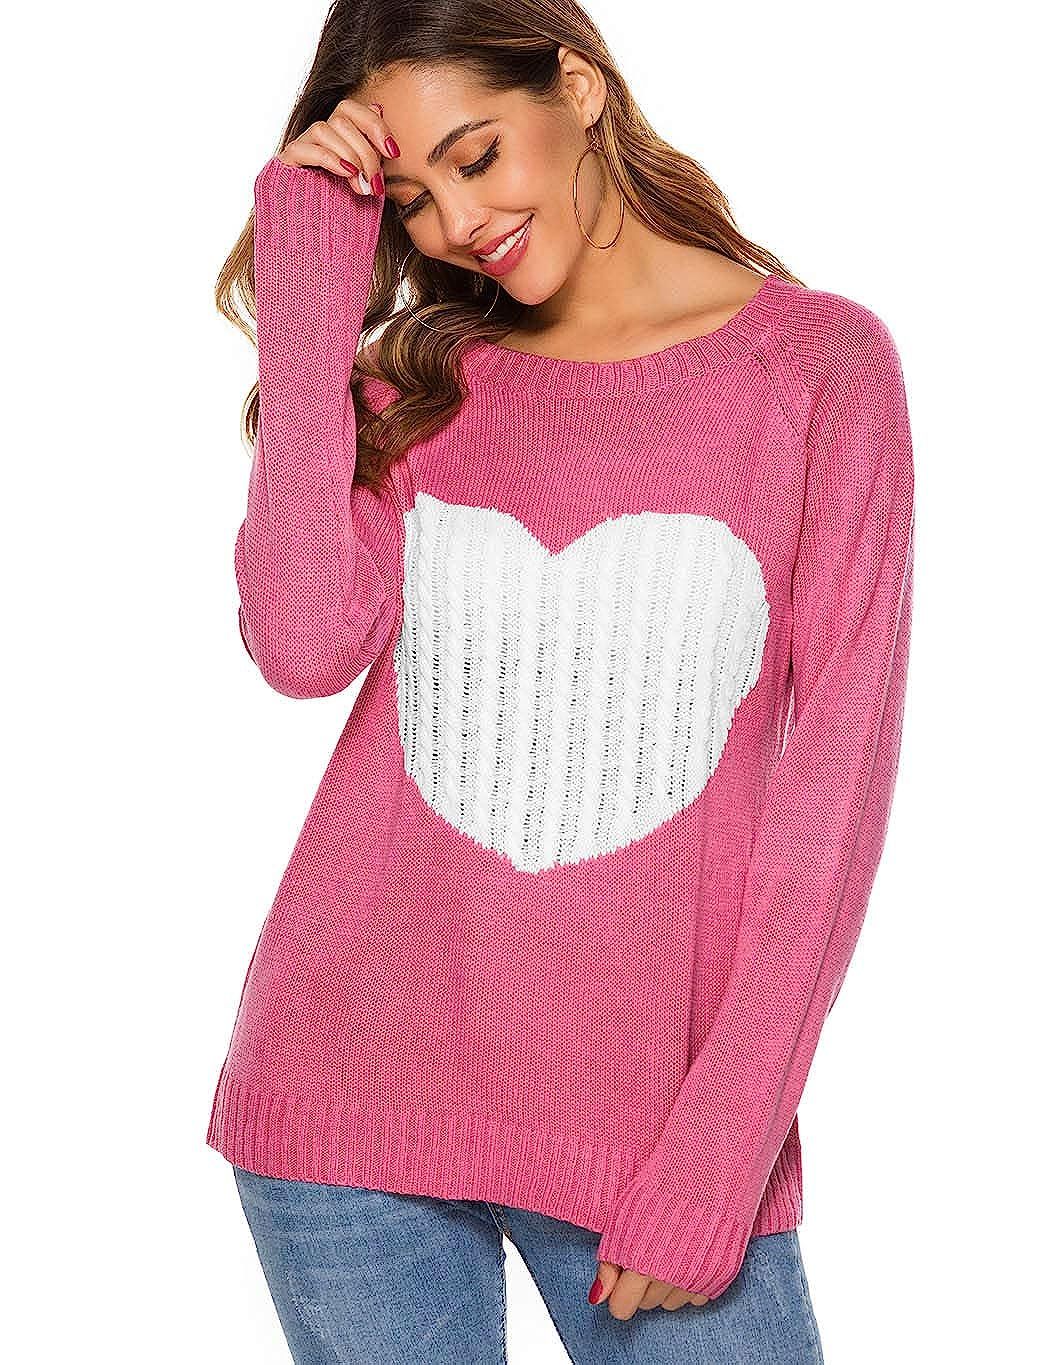 Koitmy Women's Long Sleeve Crewneck Knitted Patchwork Cute Heart Sweaters | Amazon (US)